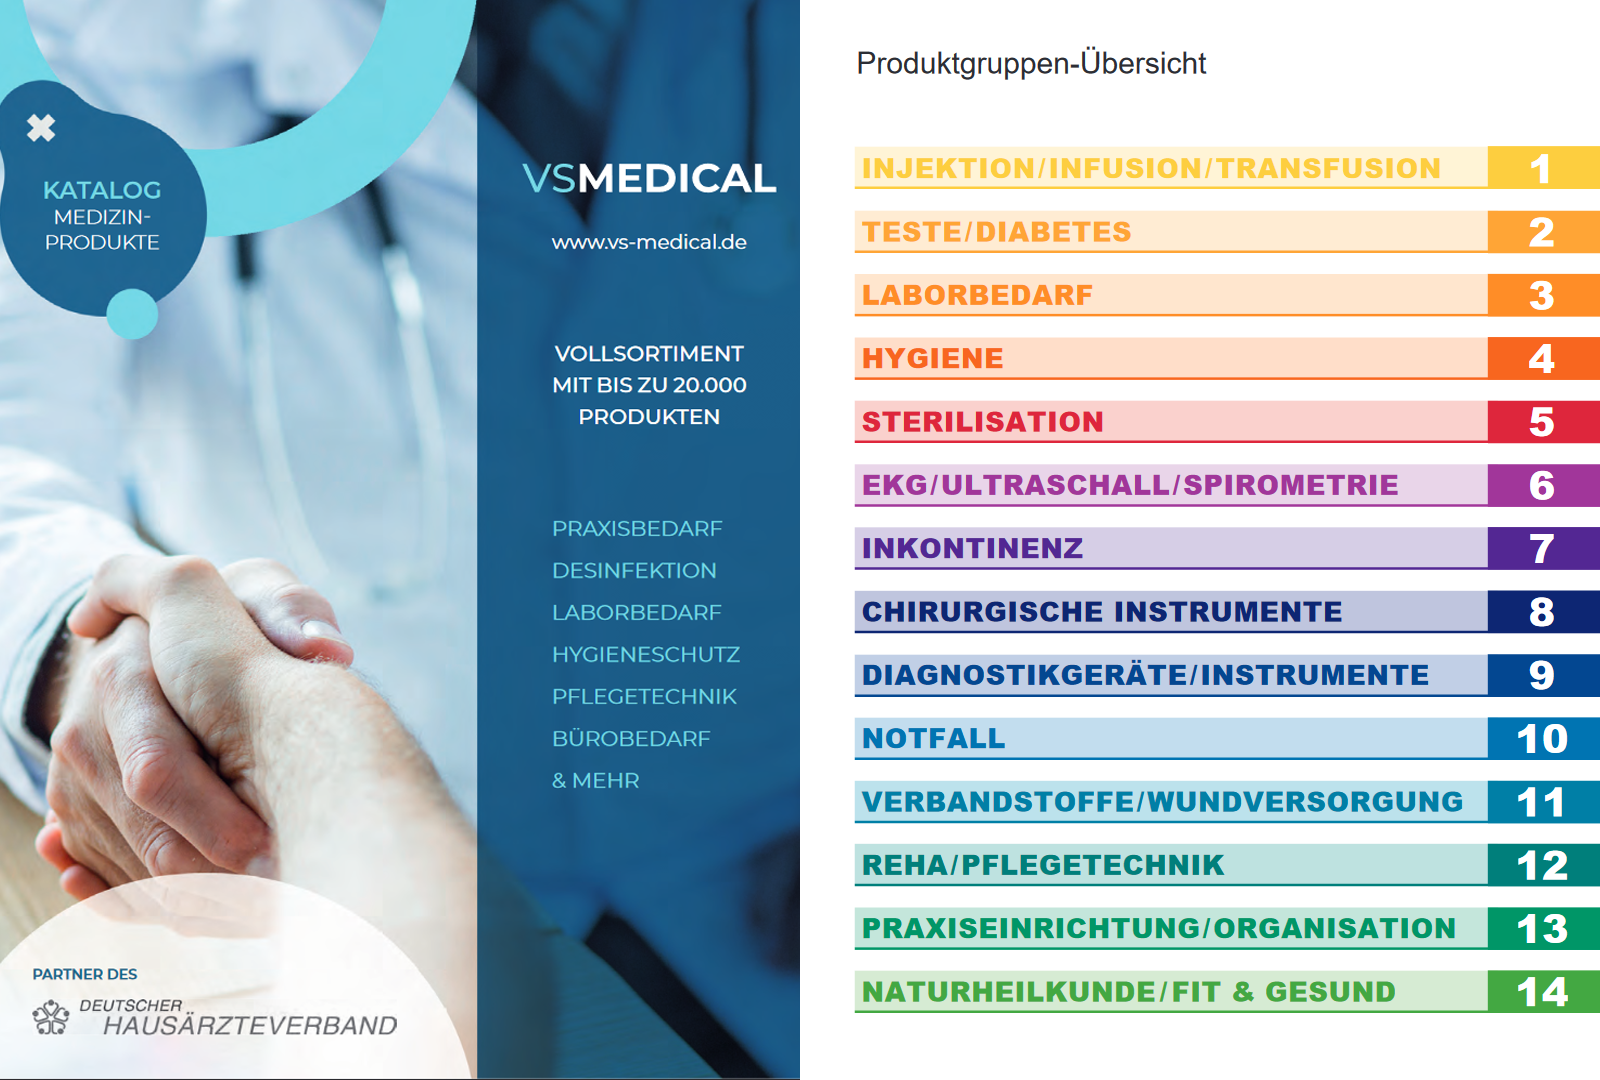 VS MEDICAL Katalog für Medizinprodukte